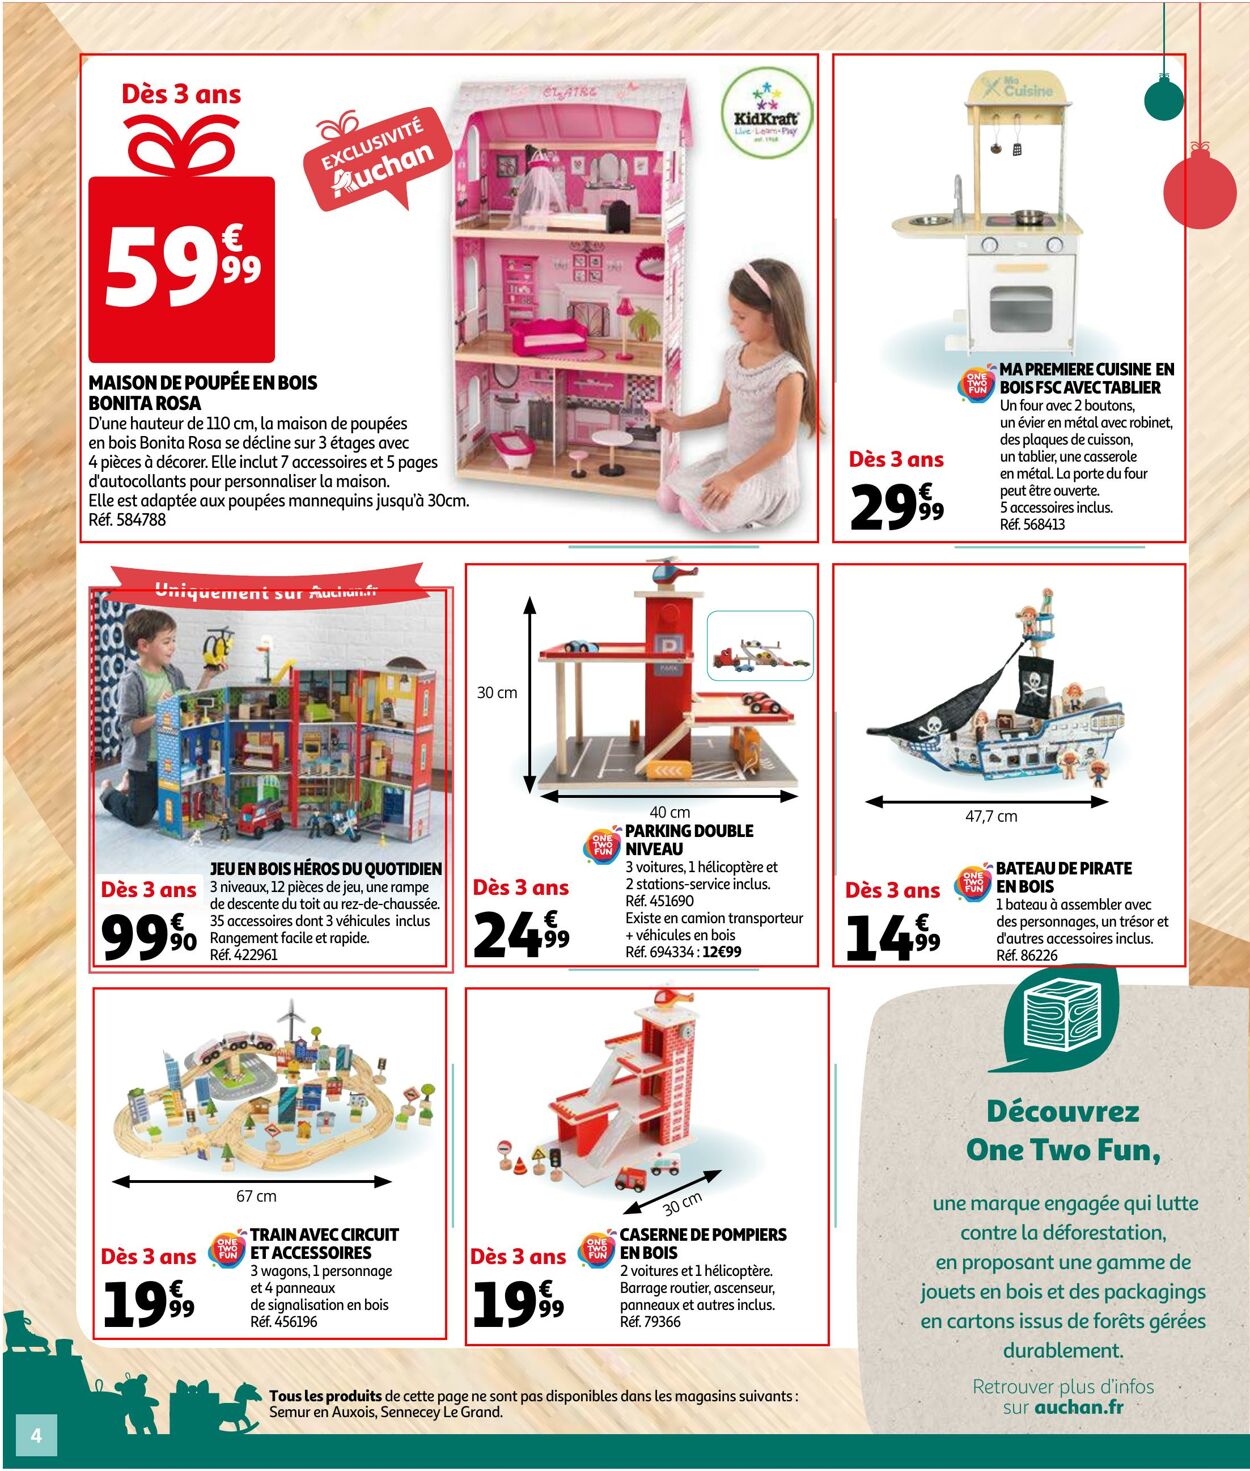 Catalogue Auchan 15.10.2021 - 06.12.2021